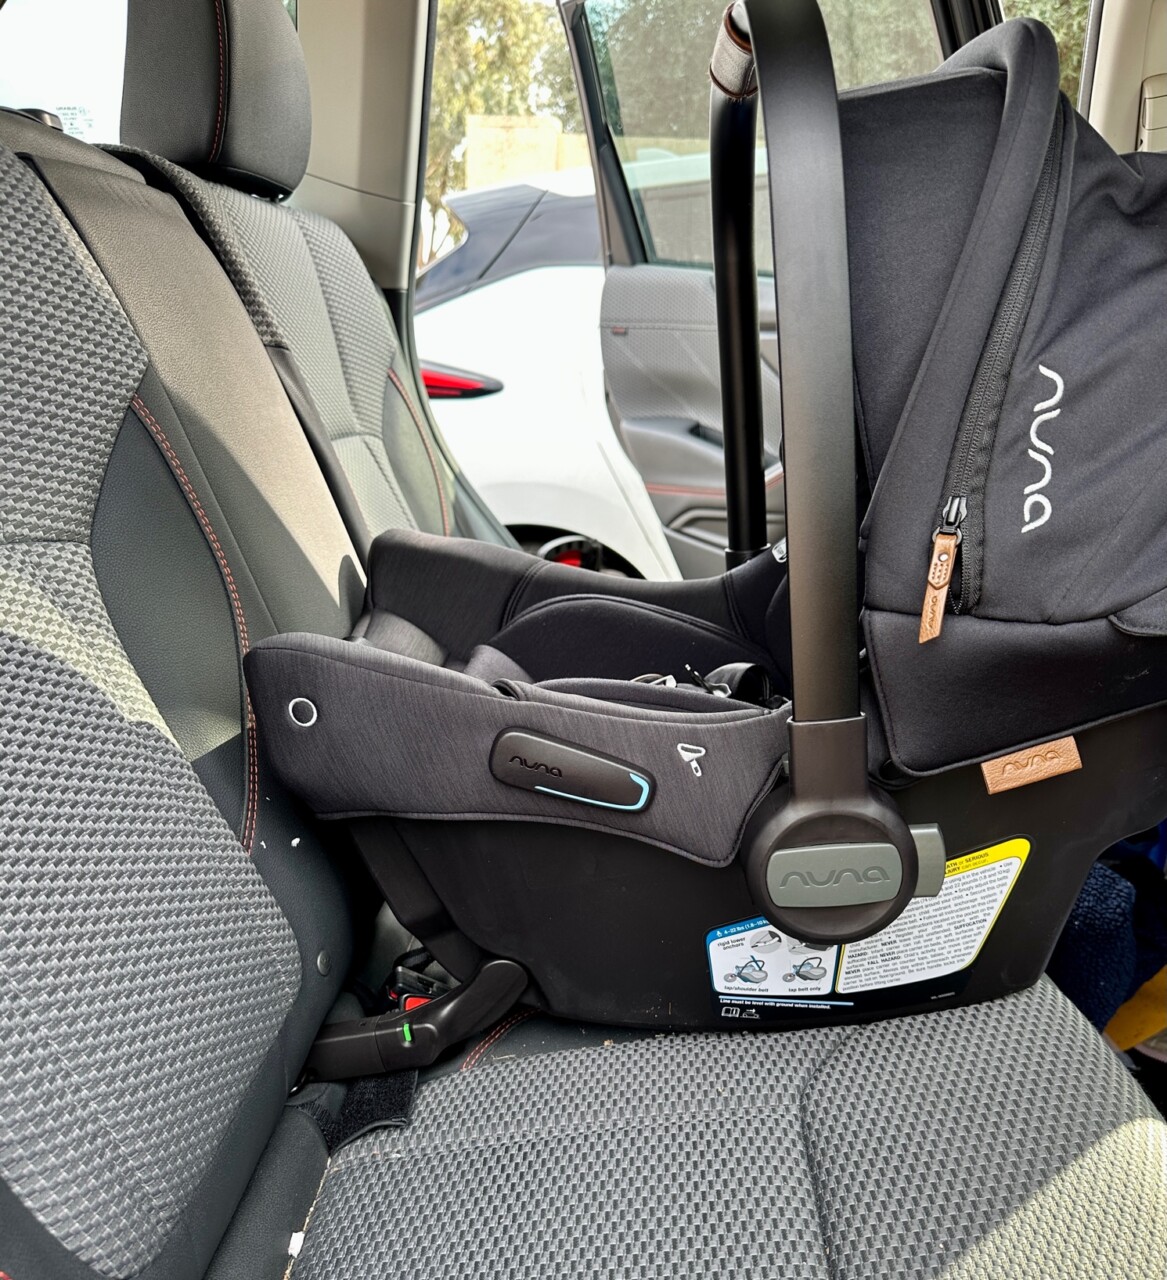 NEW! PIPA urbn  Baseless infant car seat